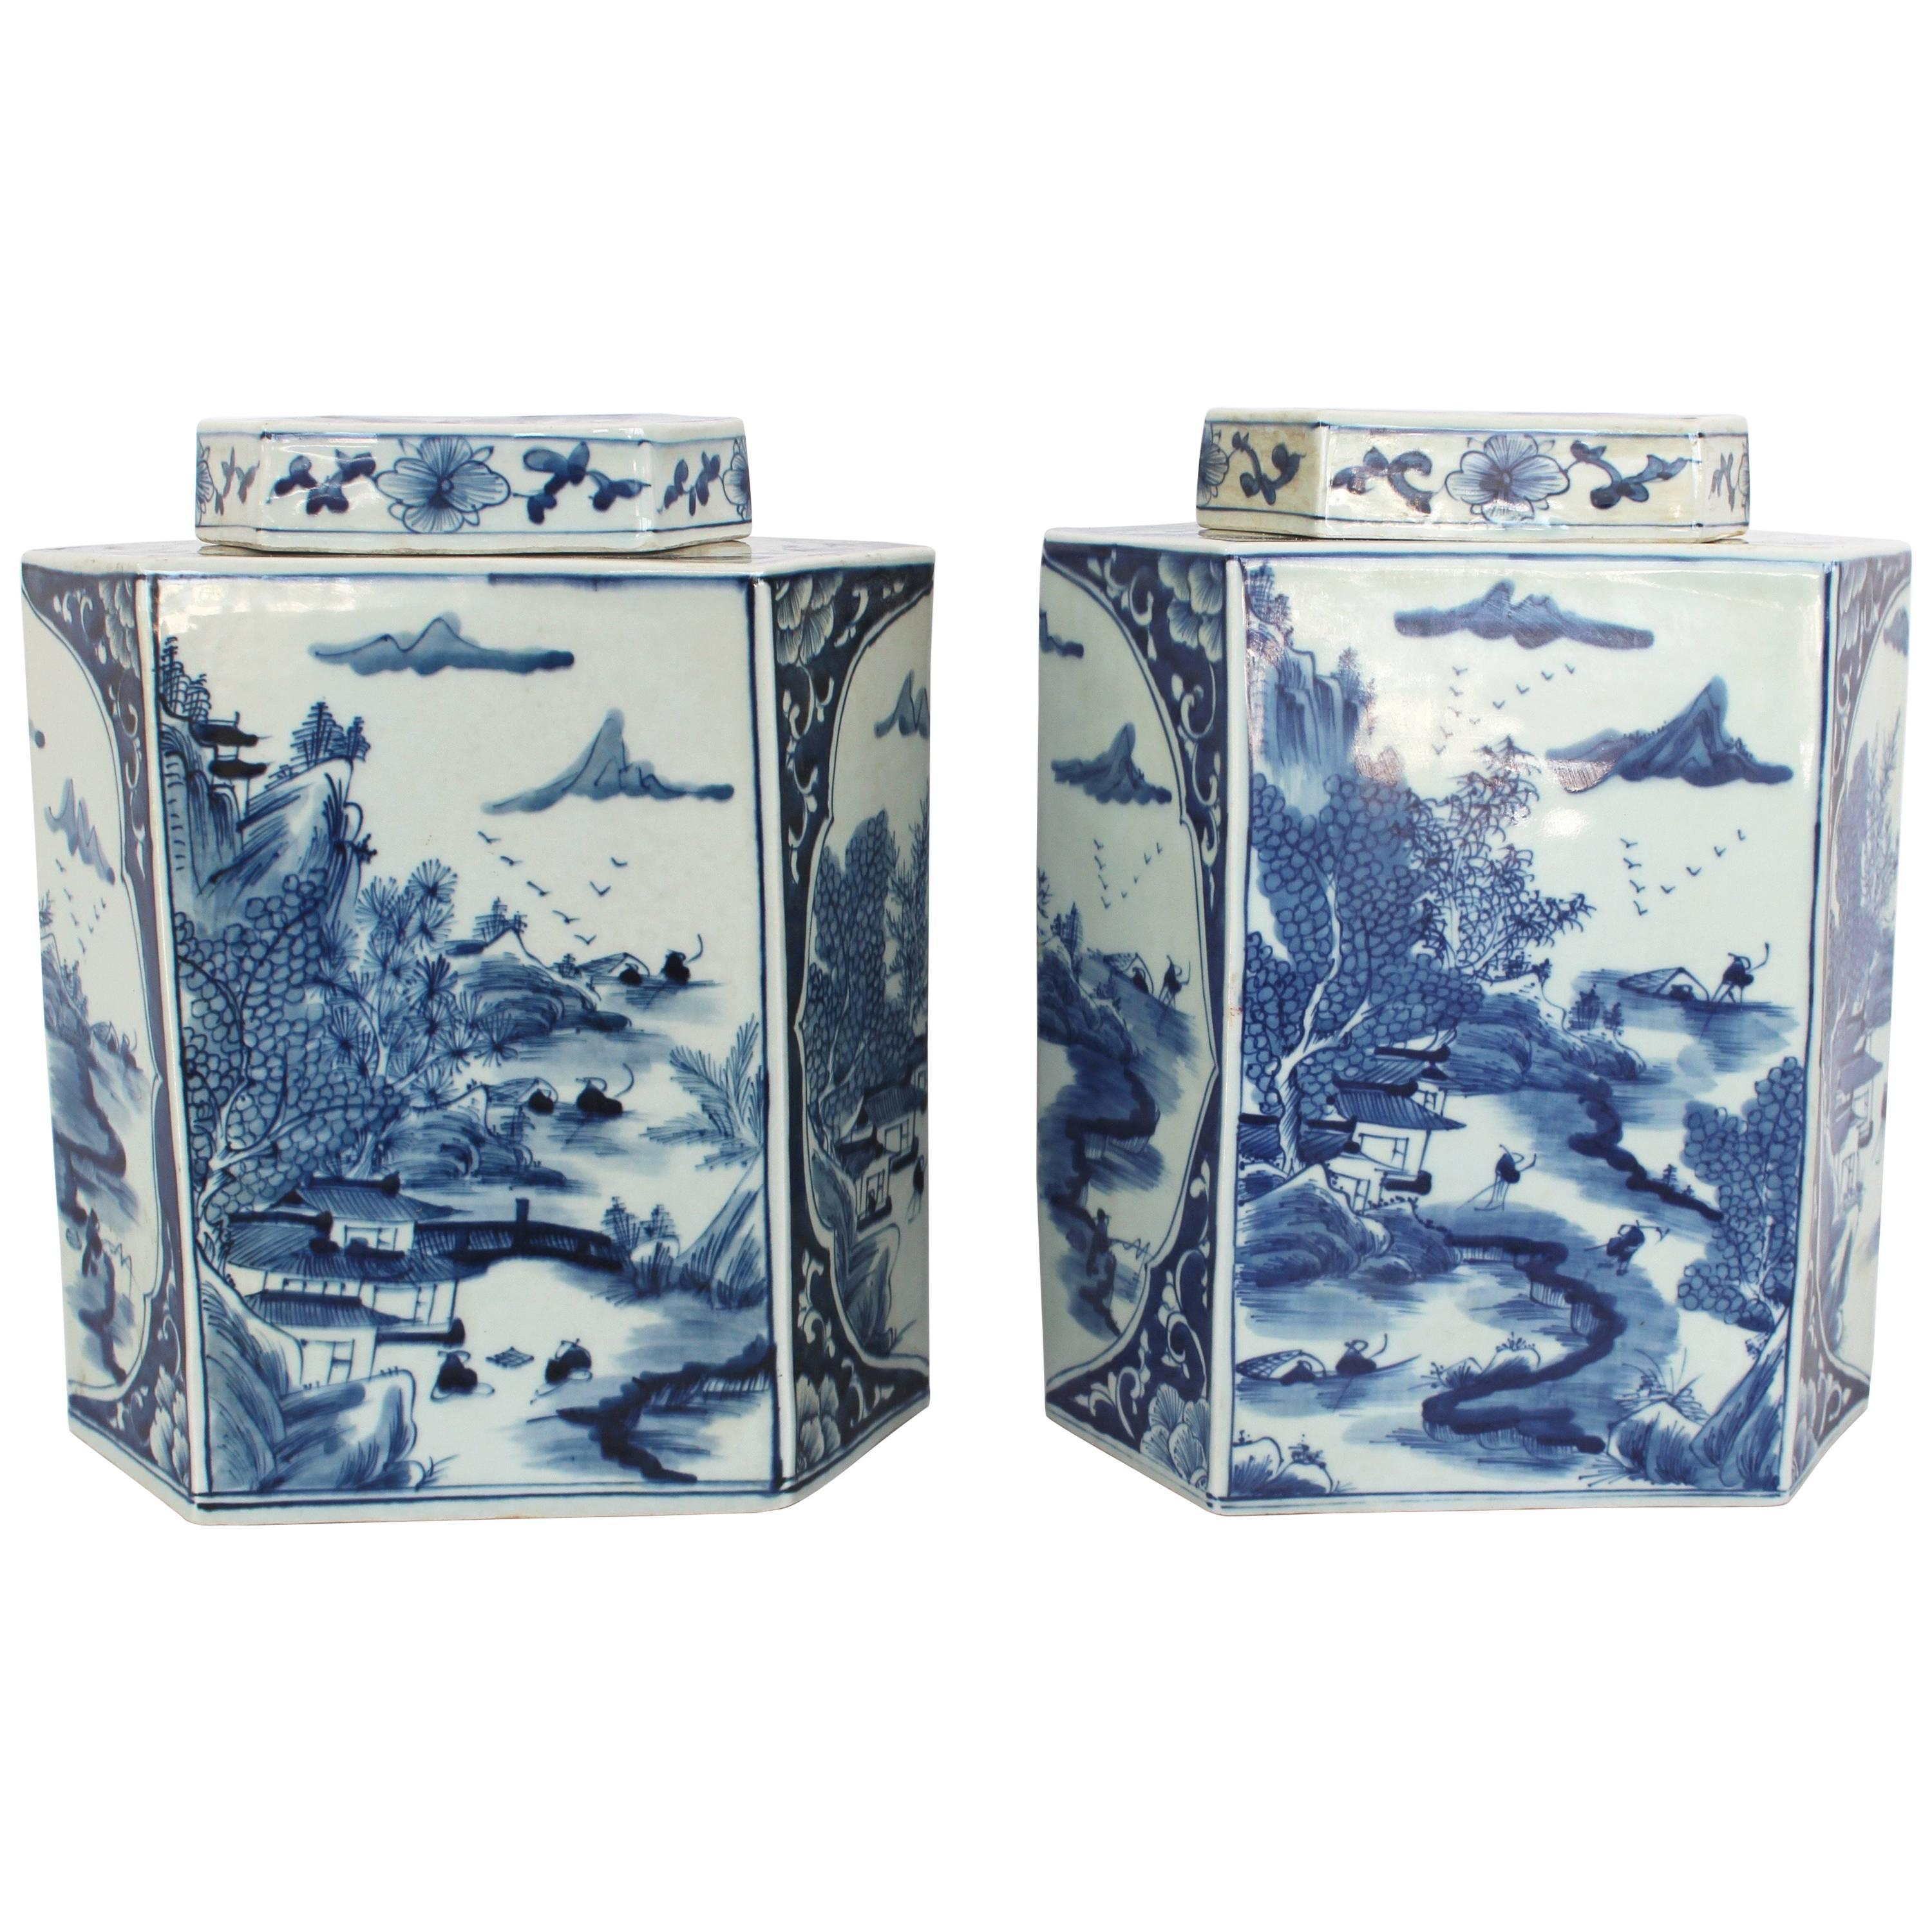 Pair of Hexagonal Chinese Blue and White Tea Caddies